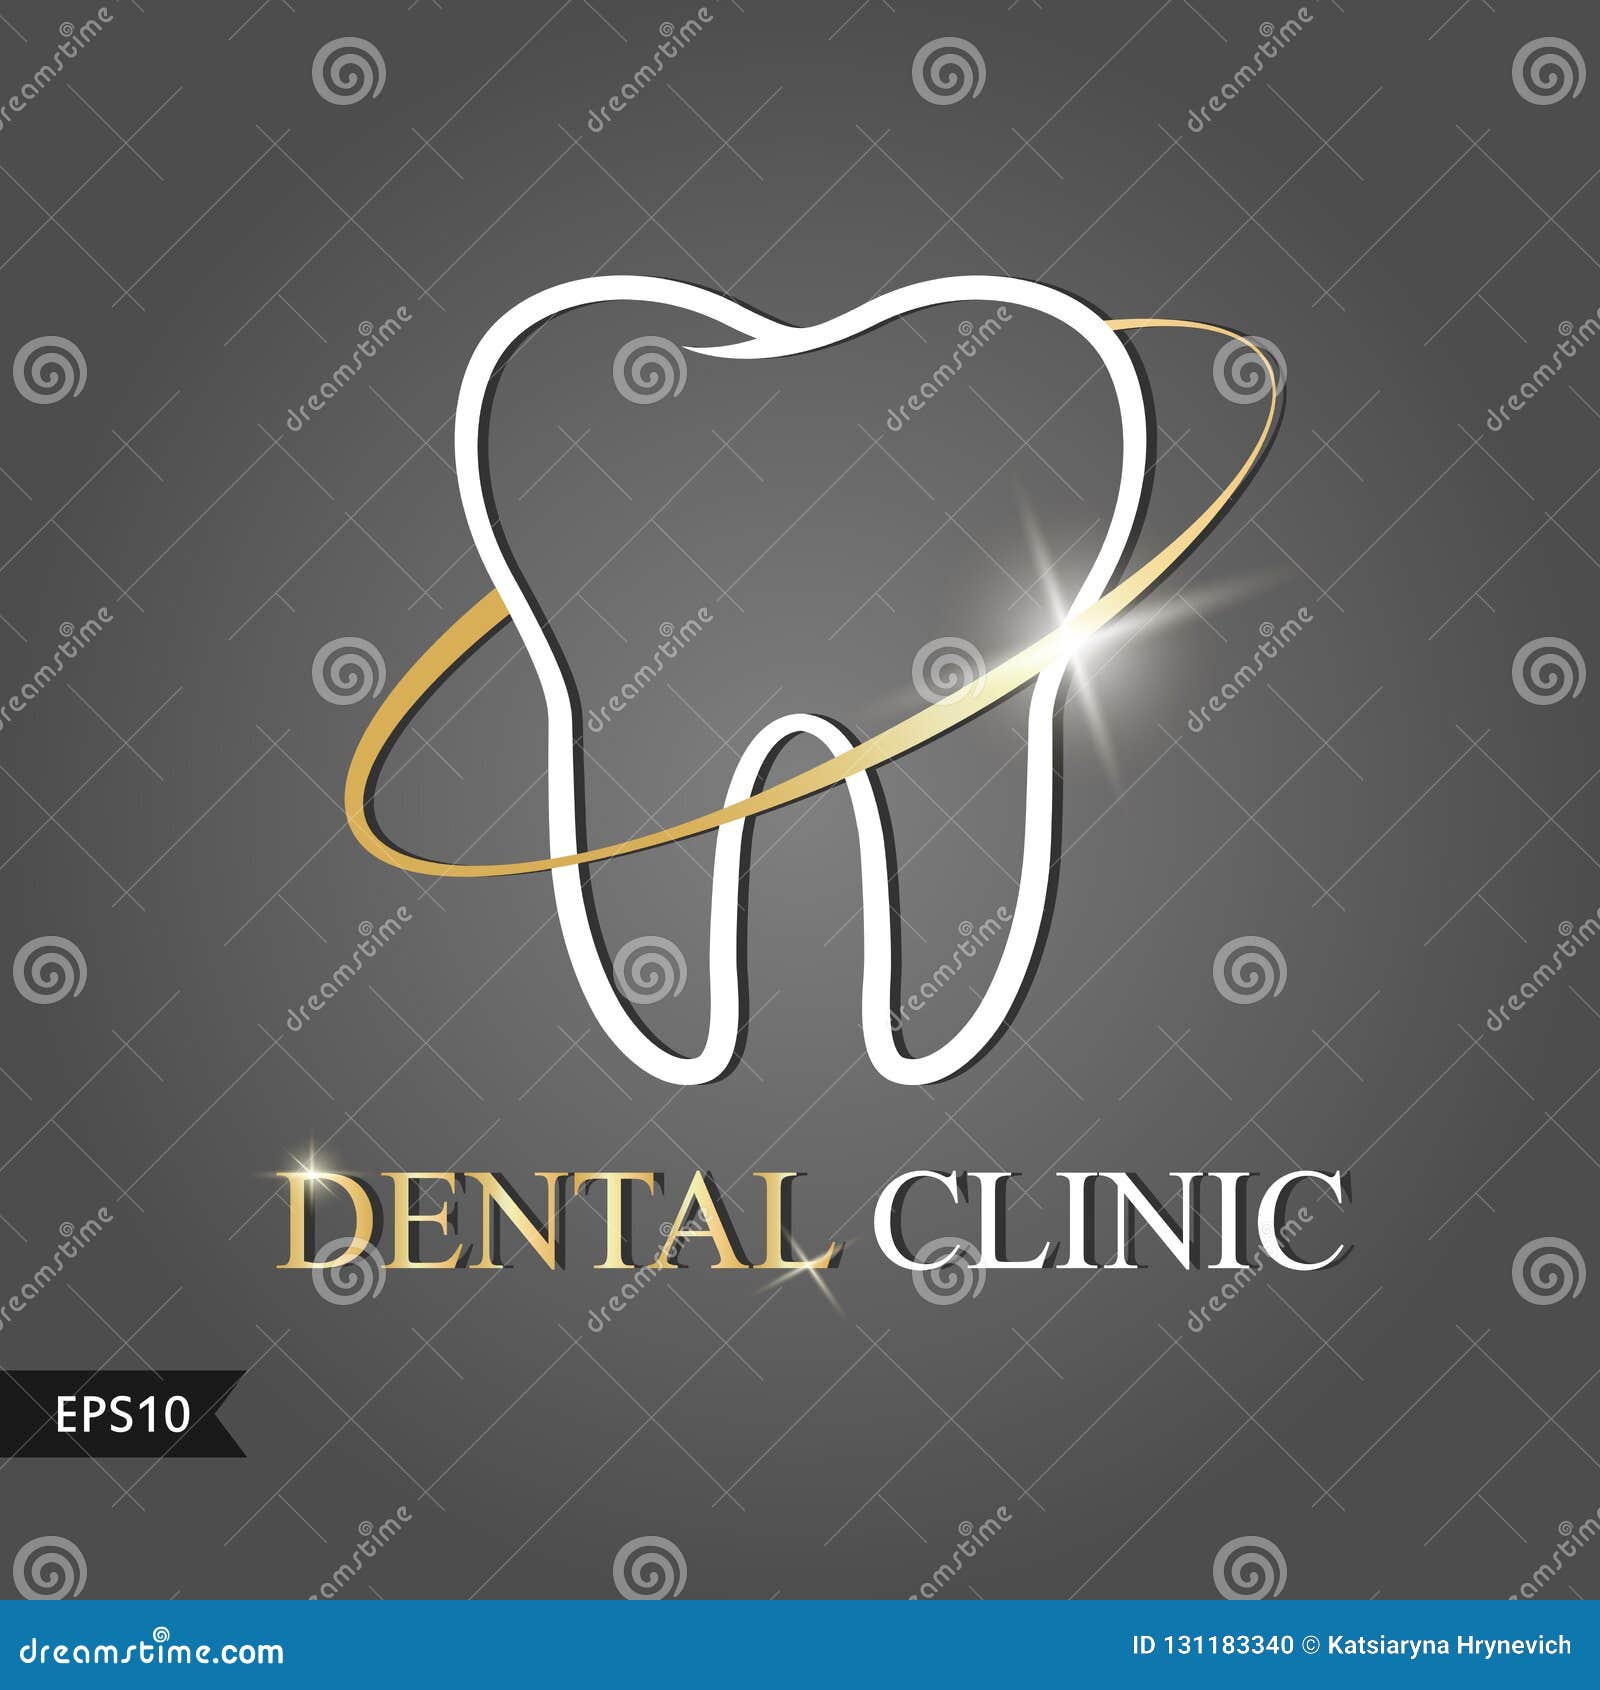  logo image for dental clinics. logo  .